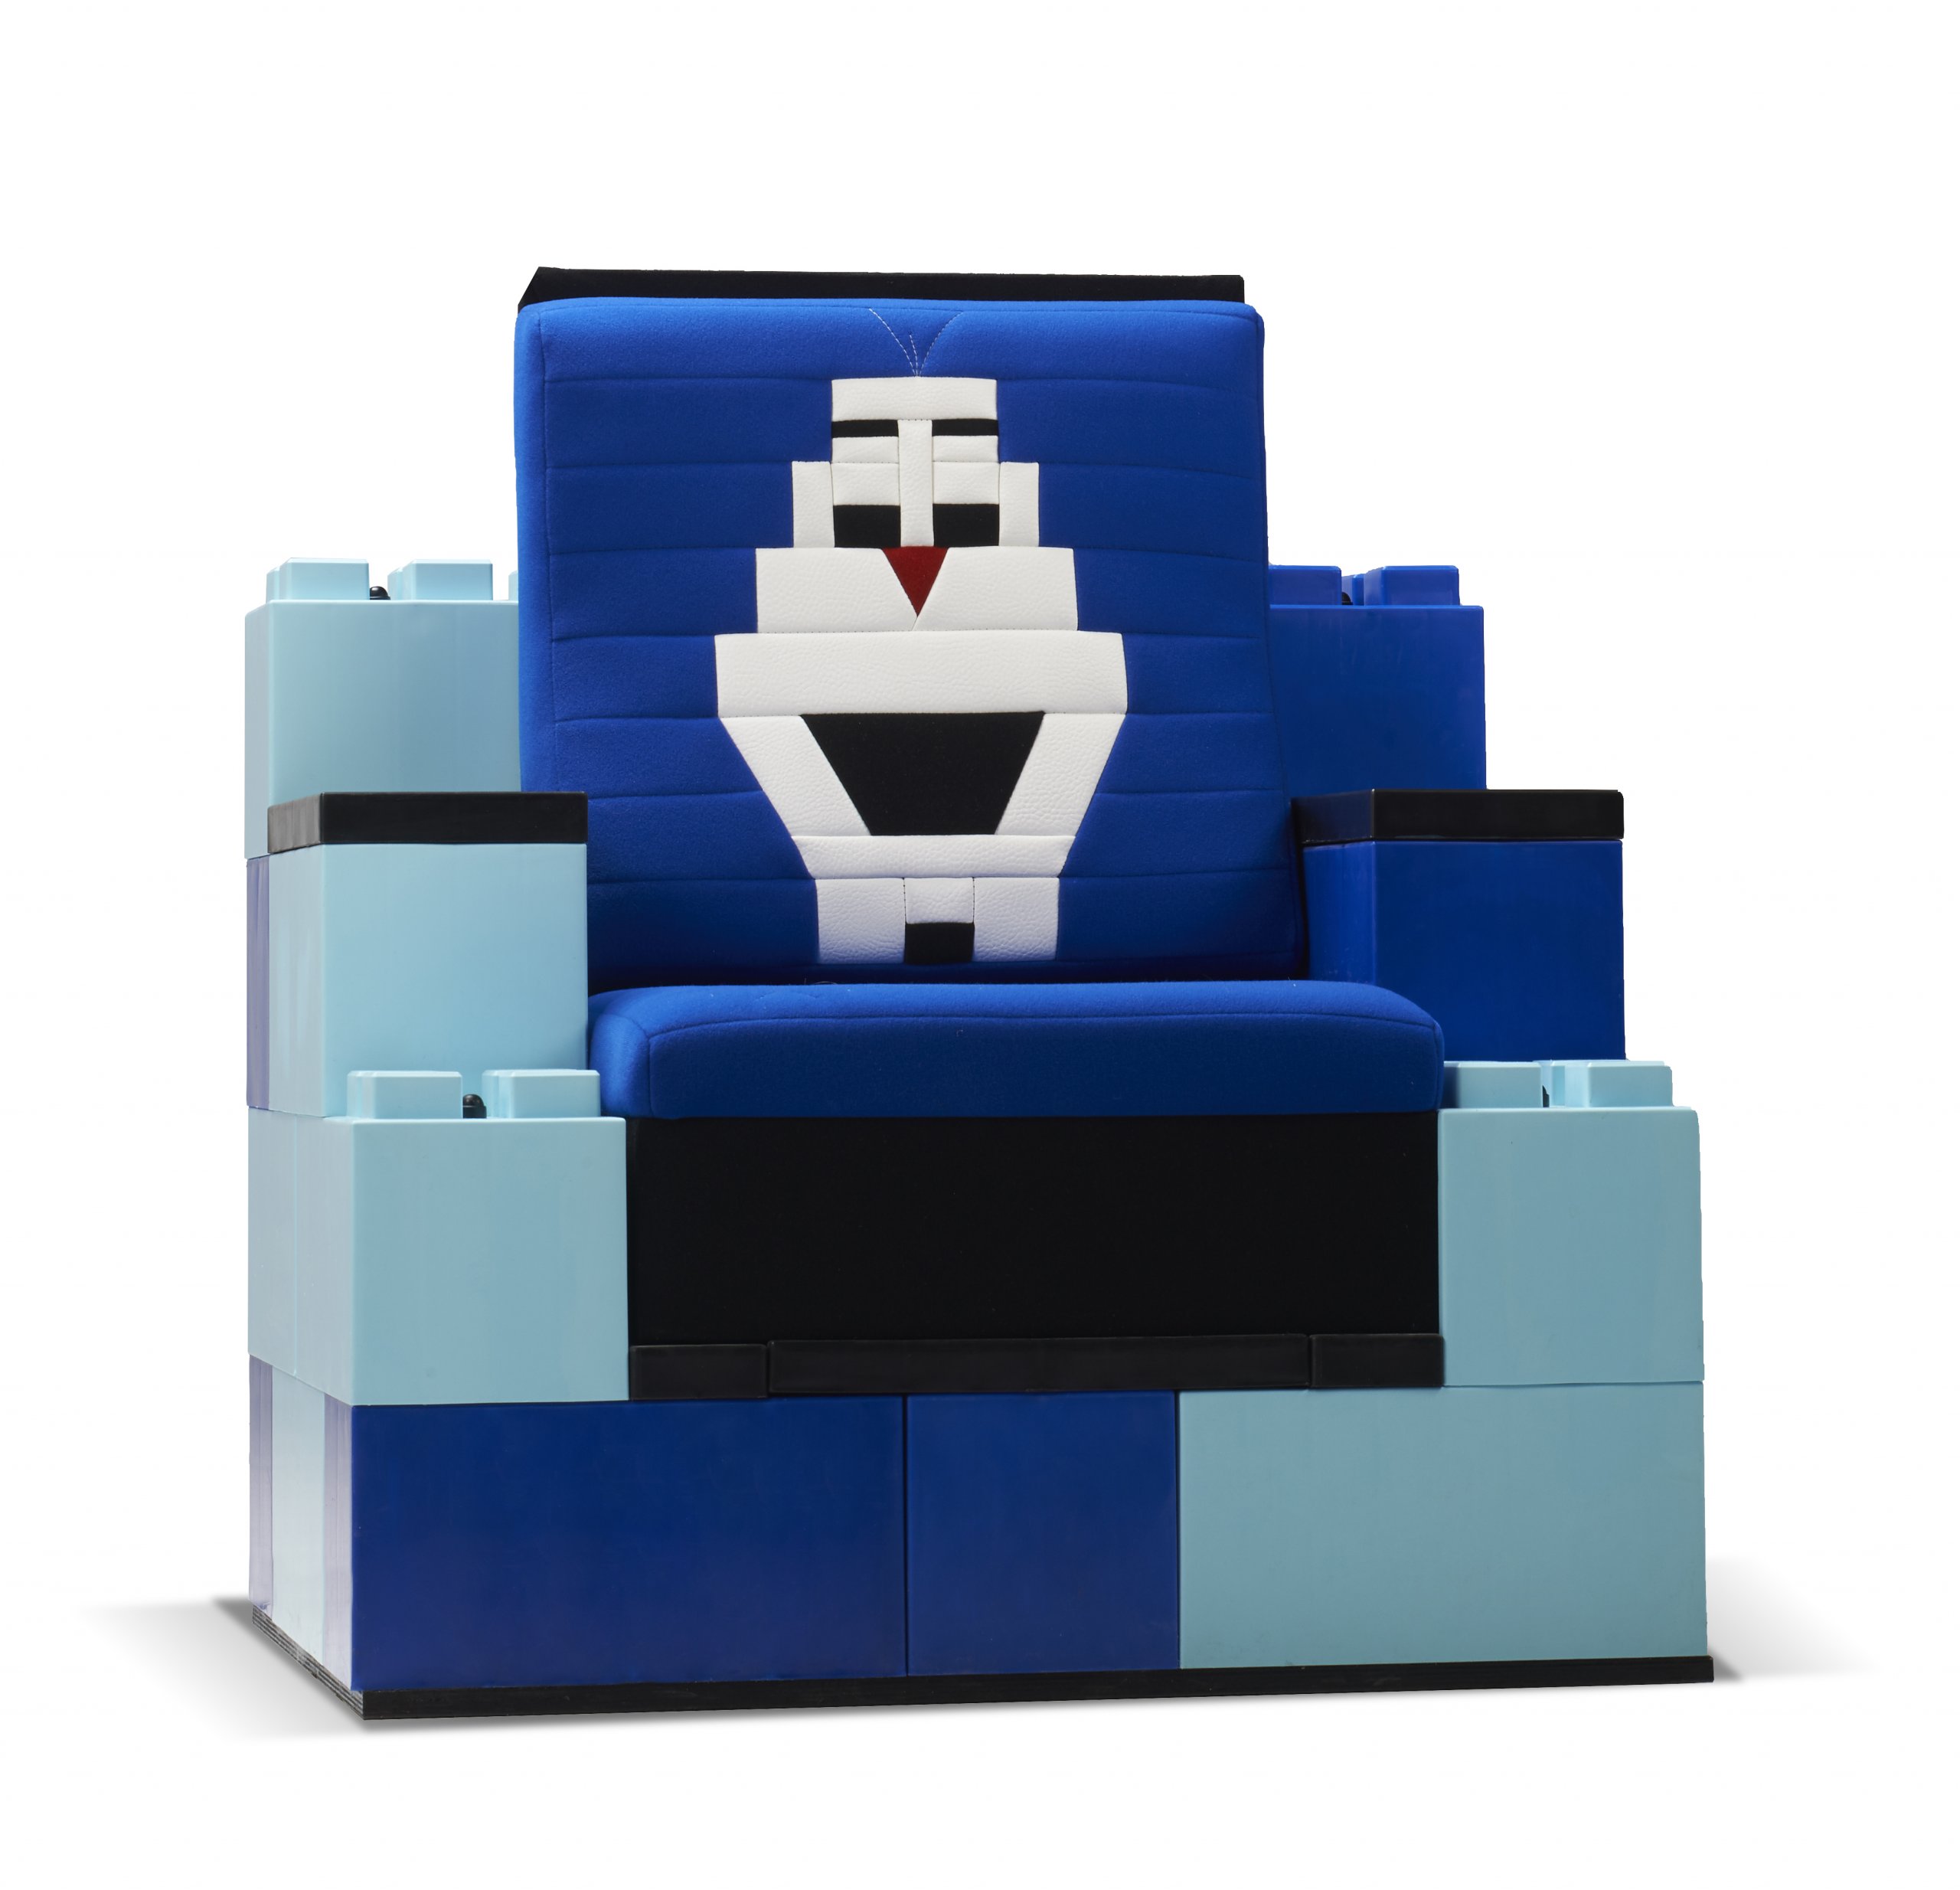 LEGO-face2 Leader de fabrication de fauteuils cinéma, théâtre ...Loge Vi